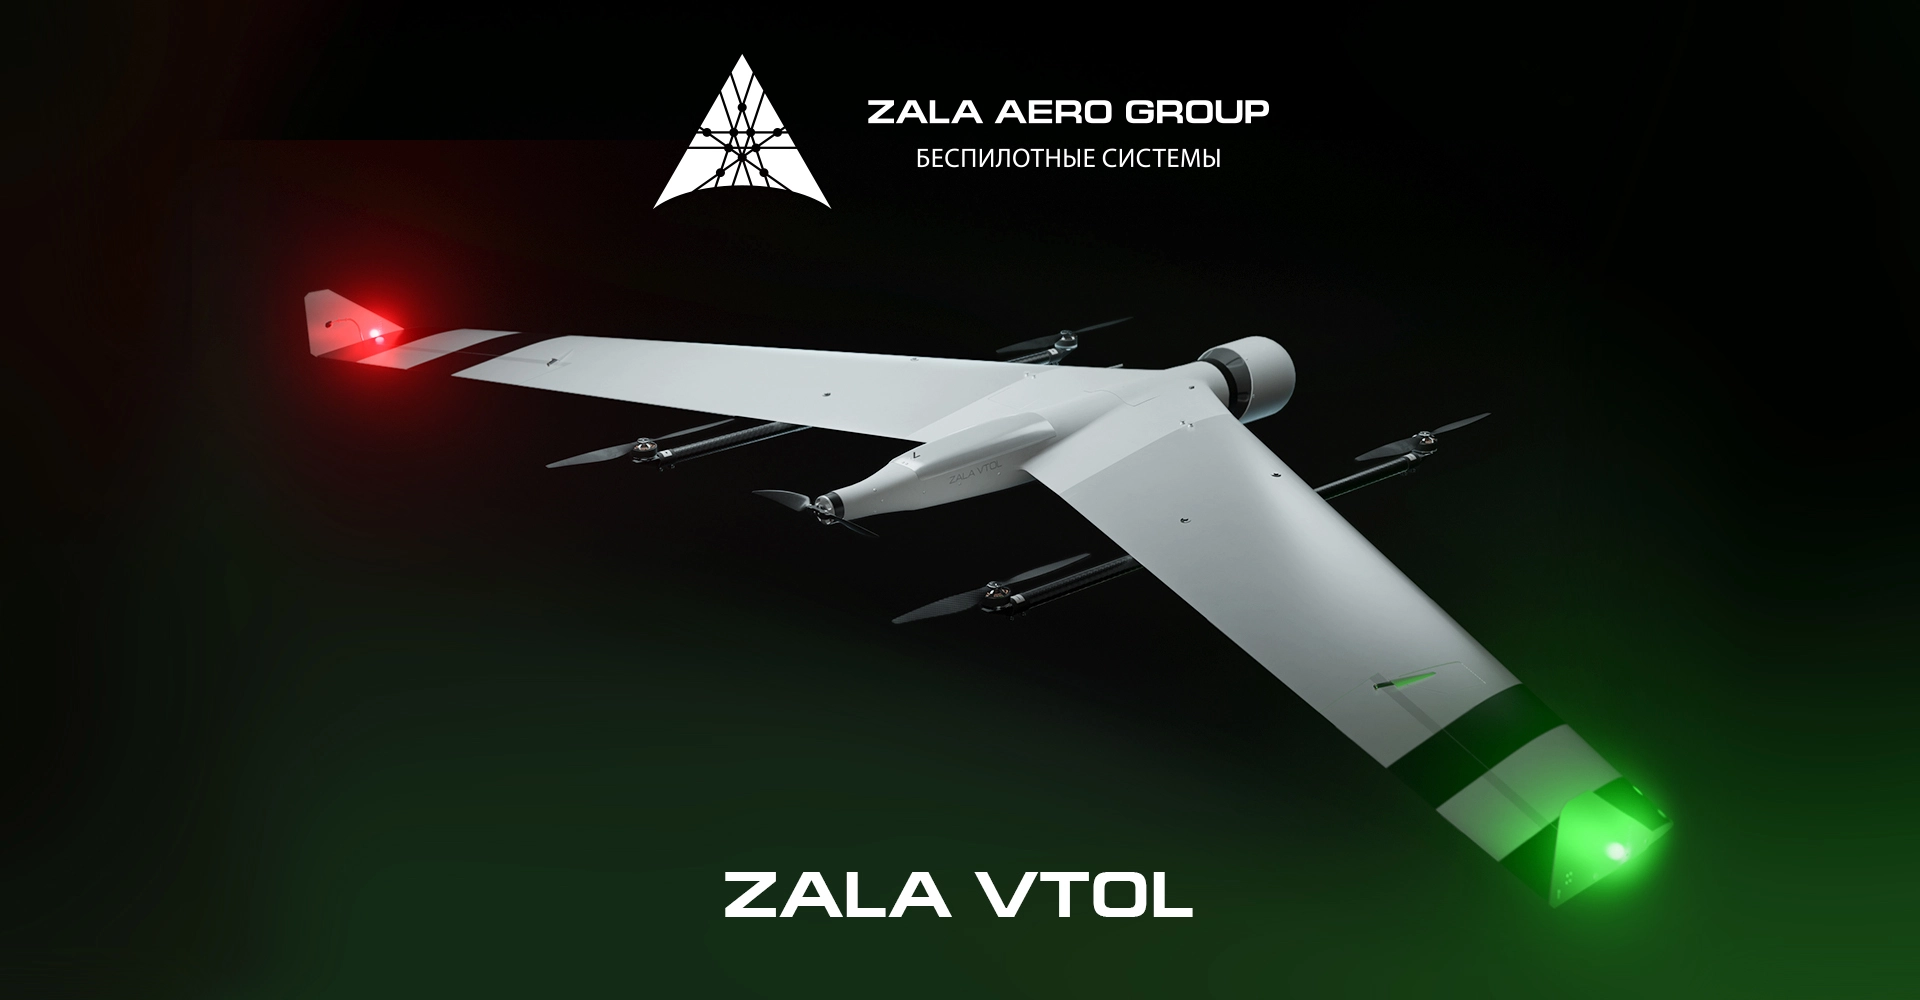 ZALA AERO will showcase the latest ZALA VTOL drone for the first time at IDEX 2021